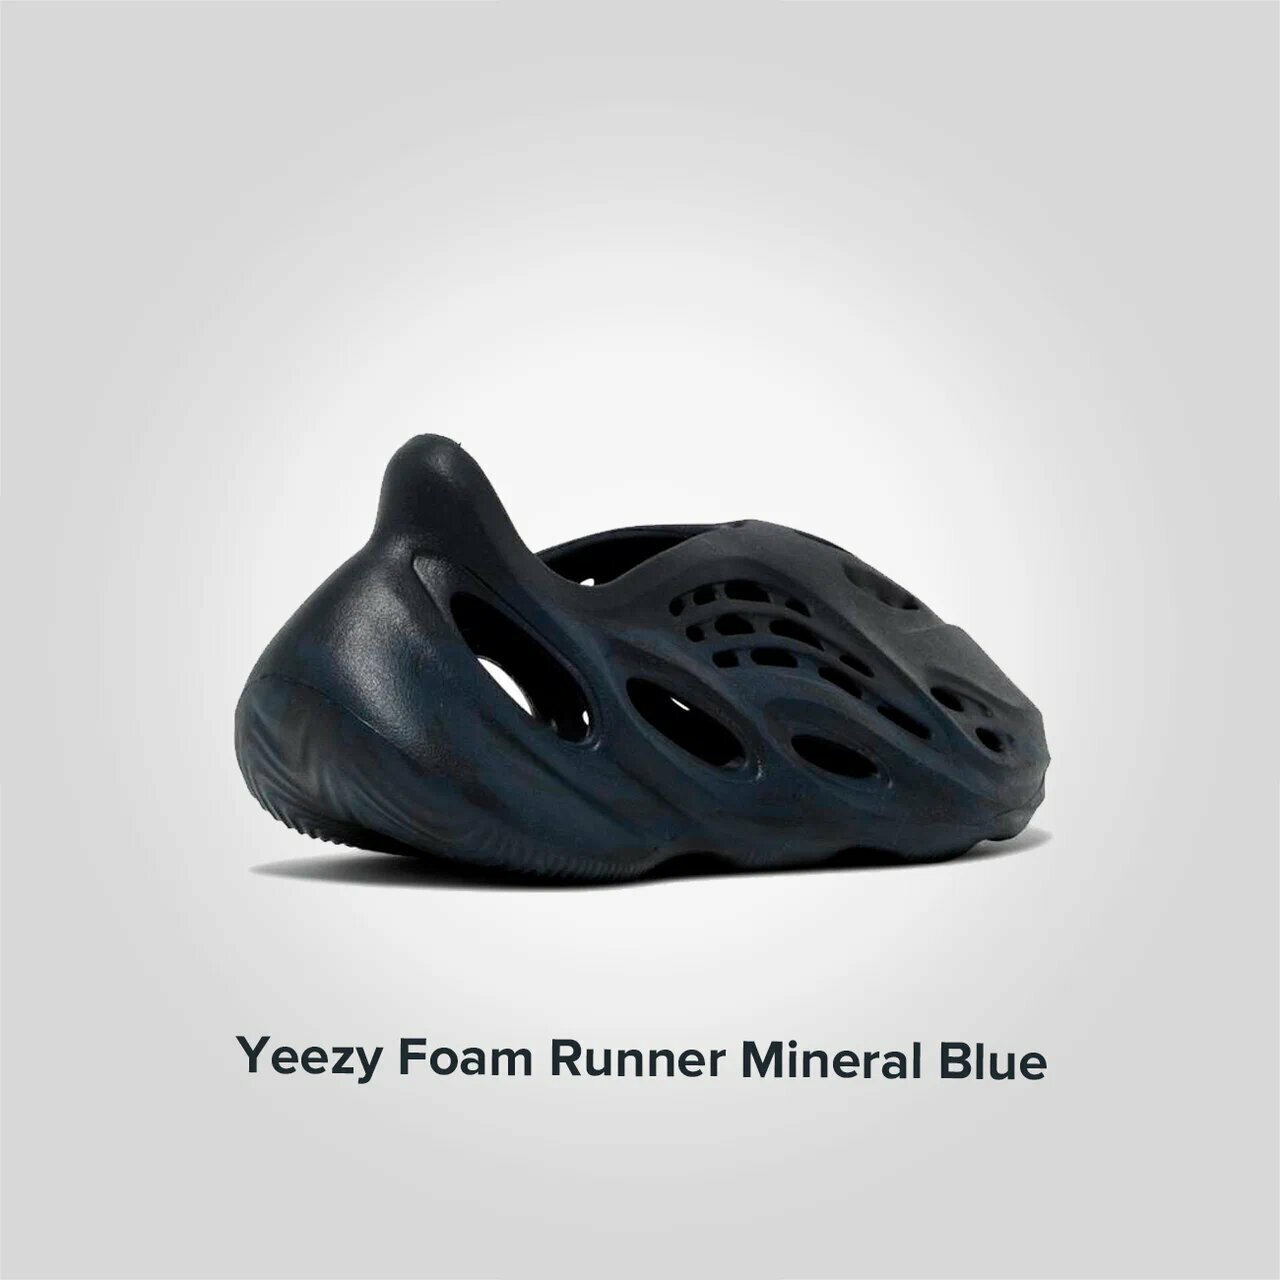 Yeezy Foam Runner Mineral Blue